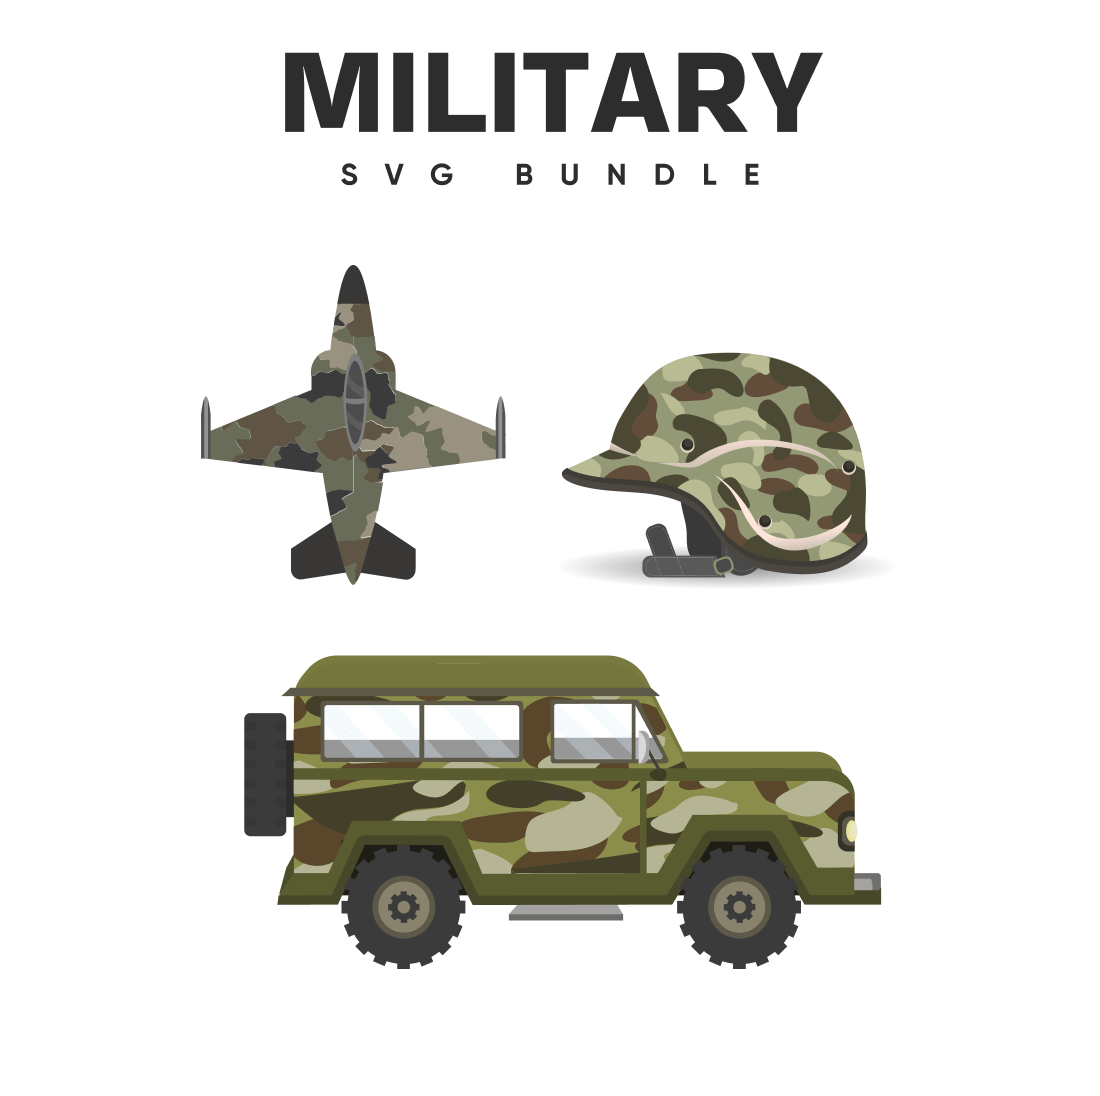 Military SVG Bundle.